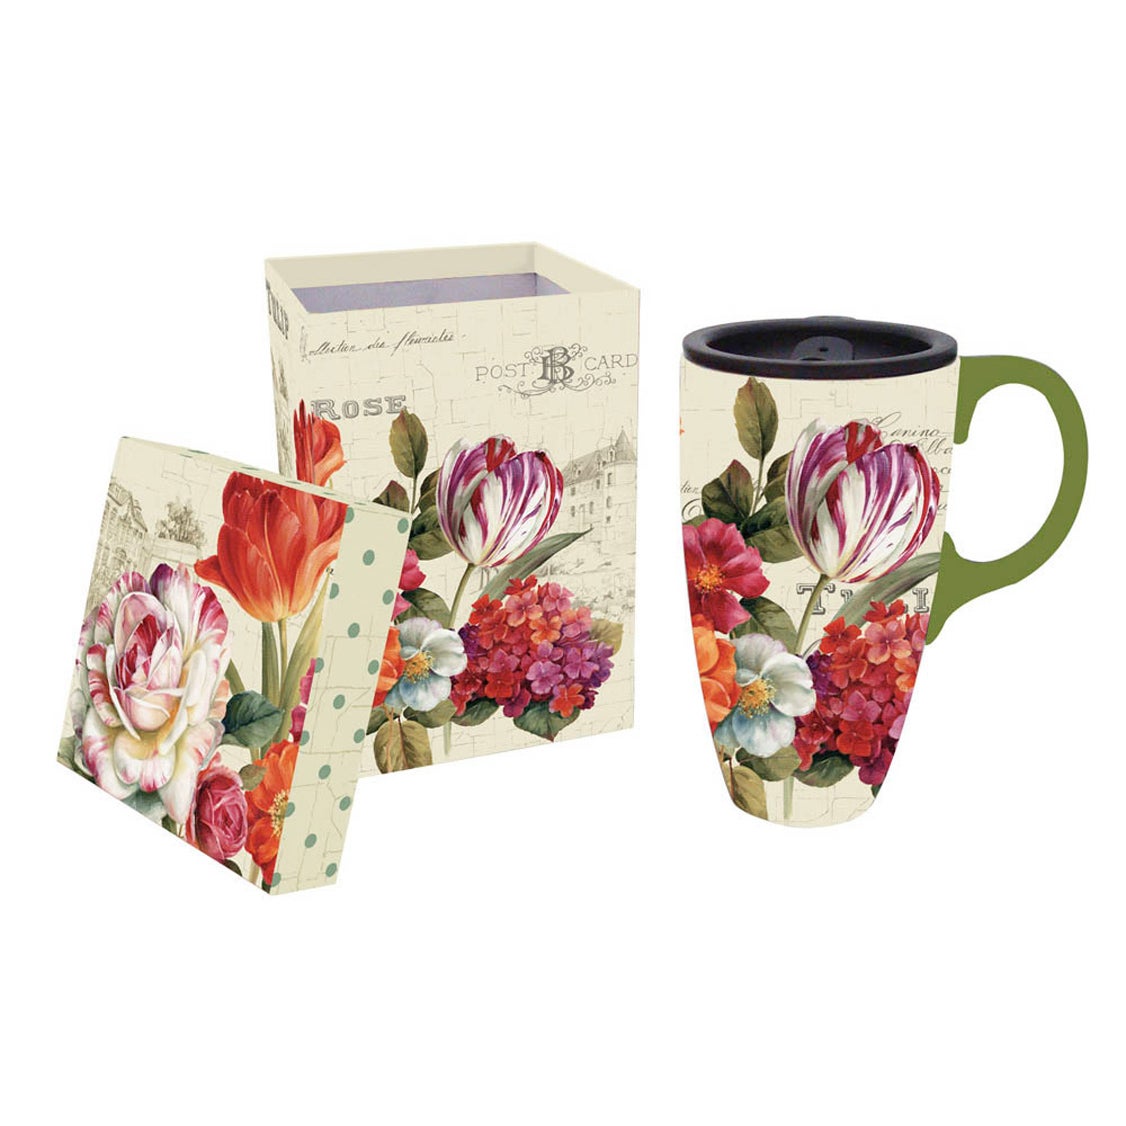 Garden View Flowers Ceramic Coffee Travel Mug with Gift Box